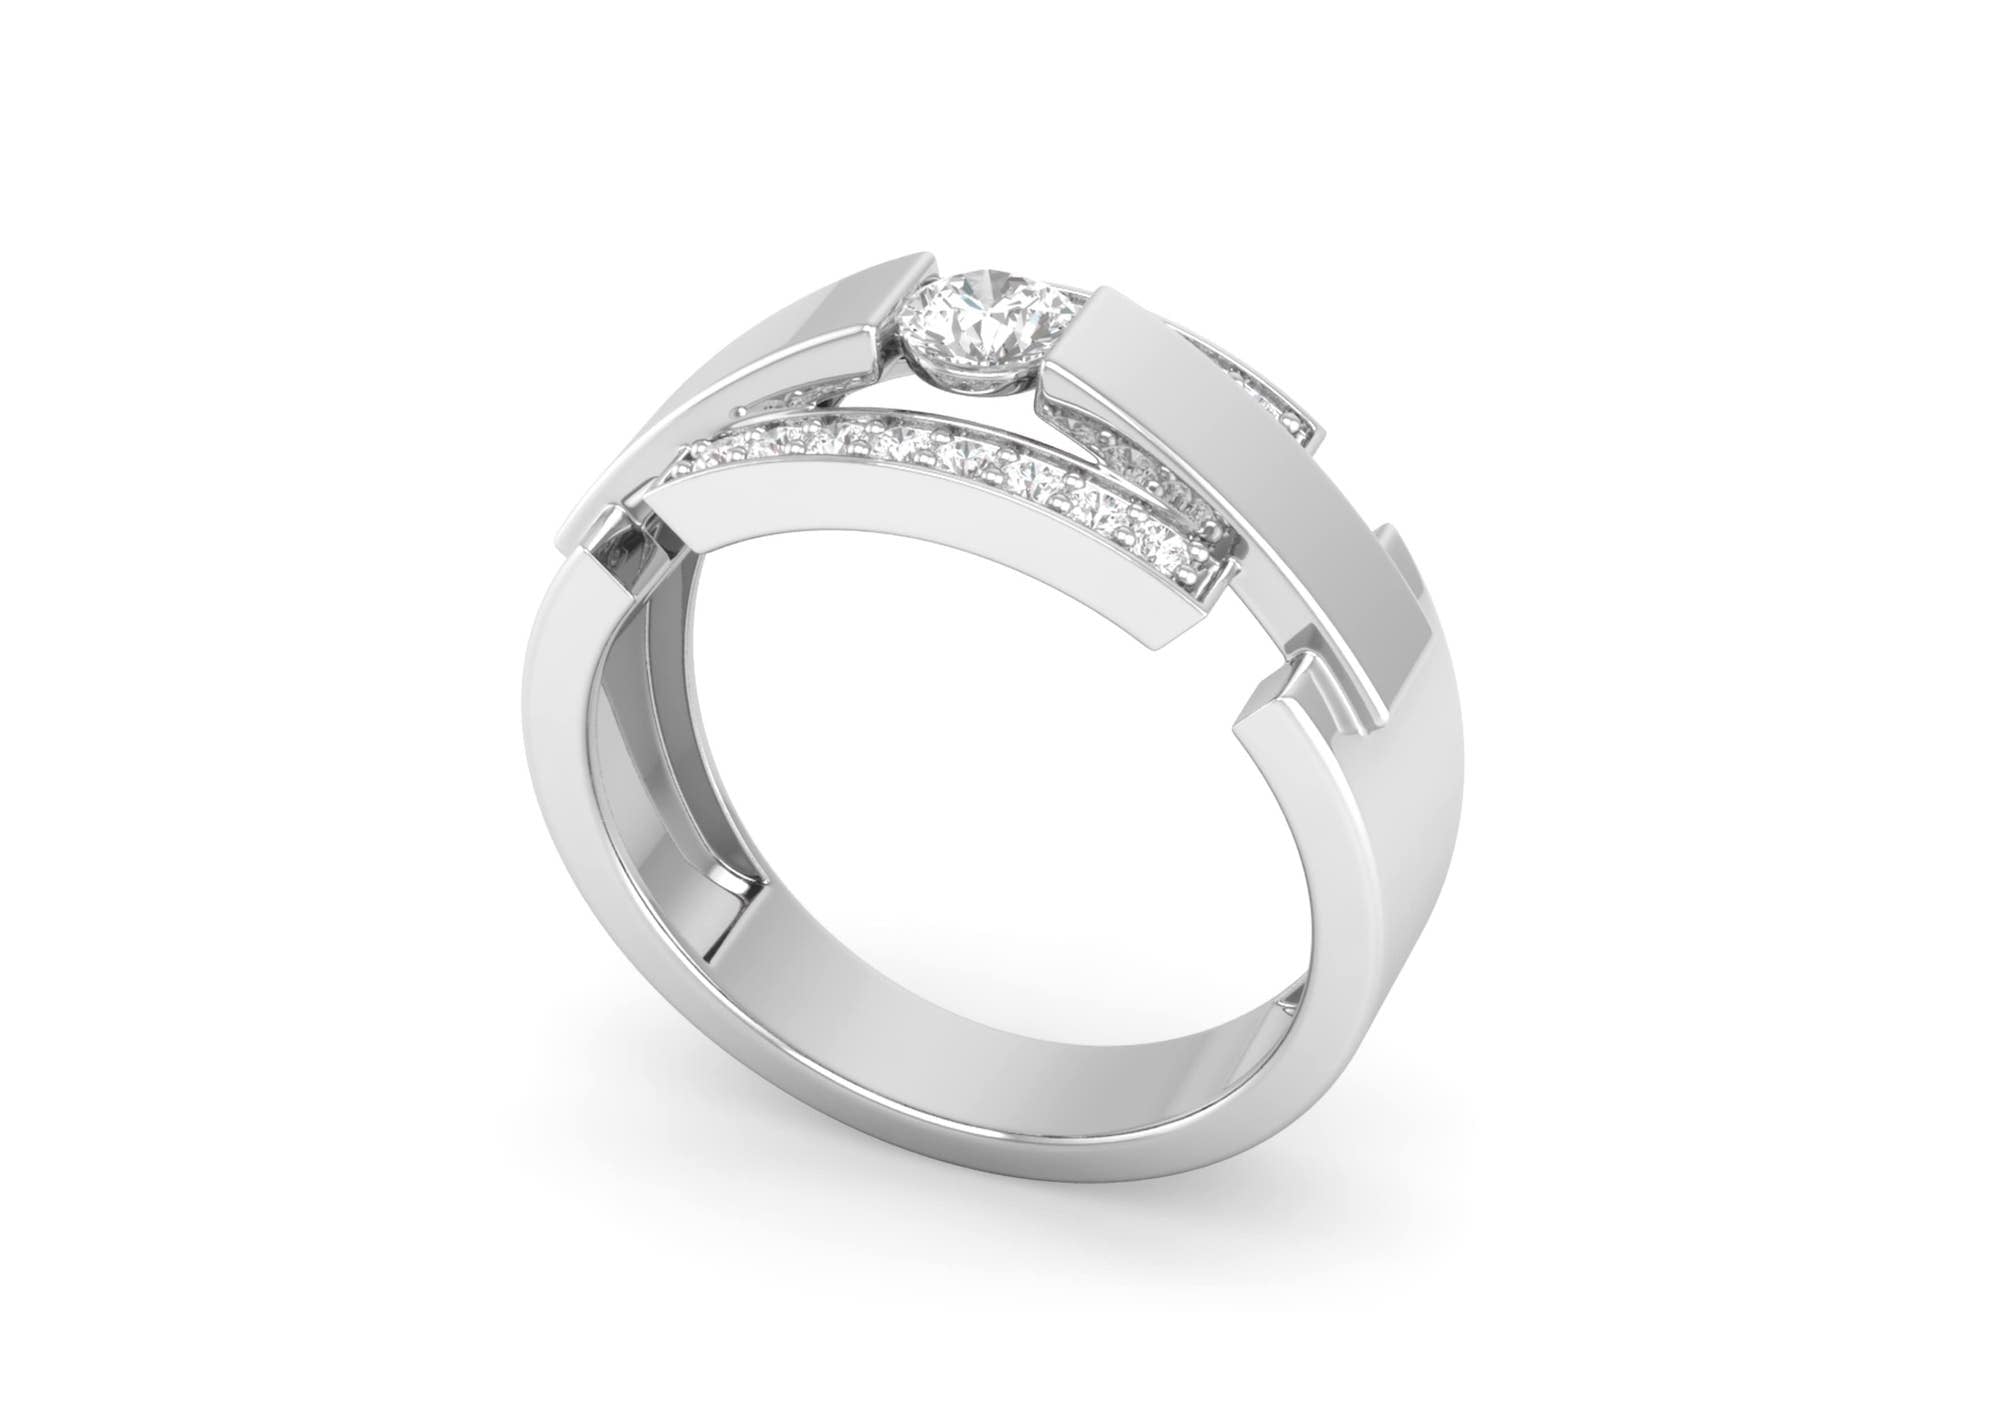 Real Silver Men's finger ring – Karizma Jewels